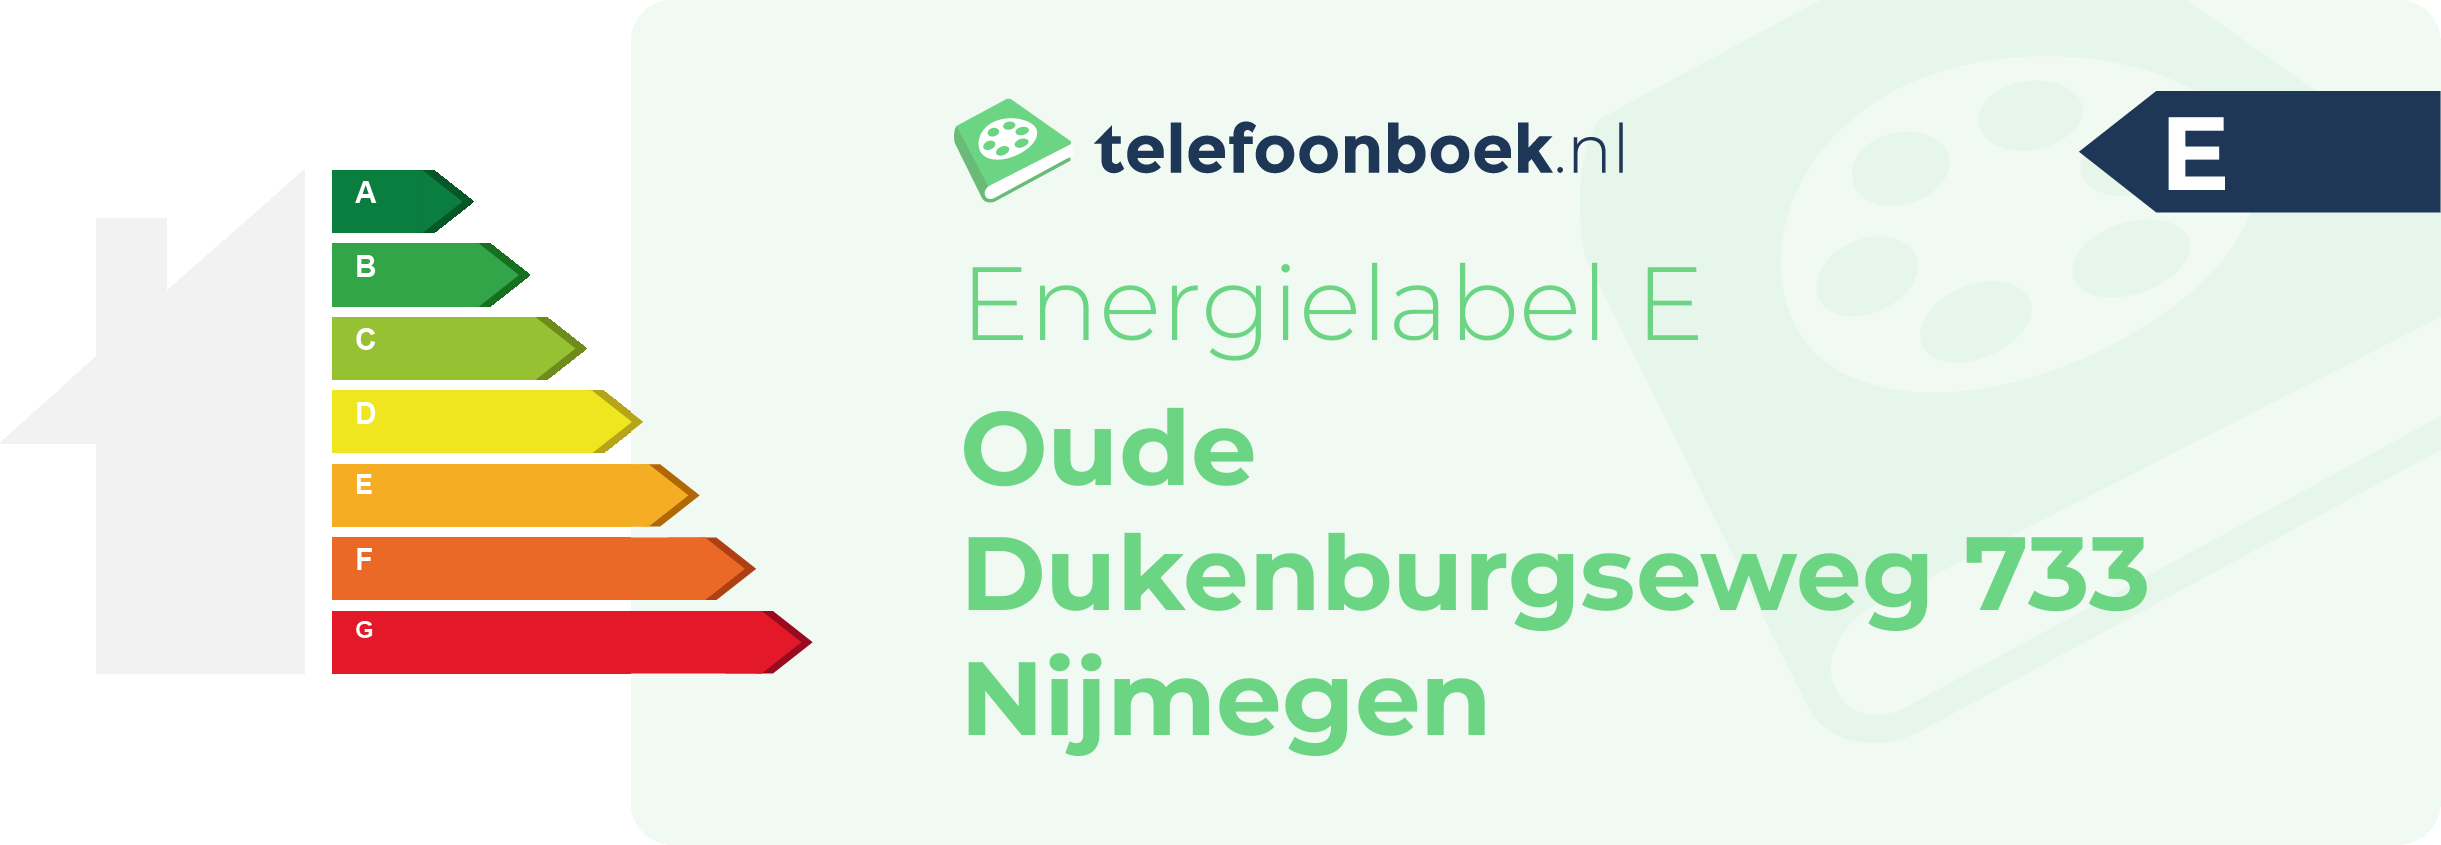 Energielabel Oude Dukenburgseweg 733 Nijmegen